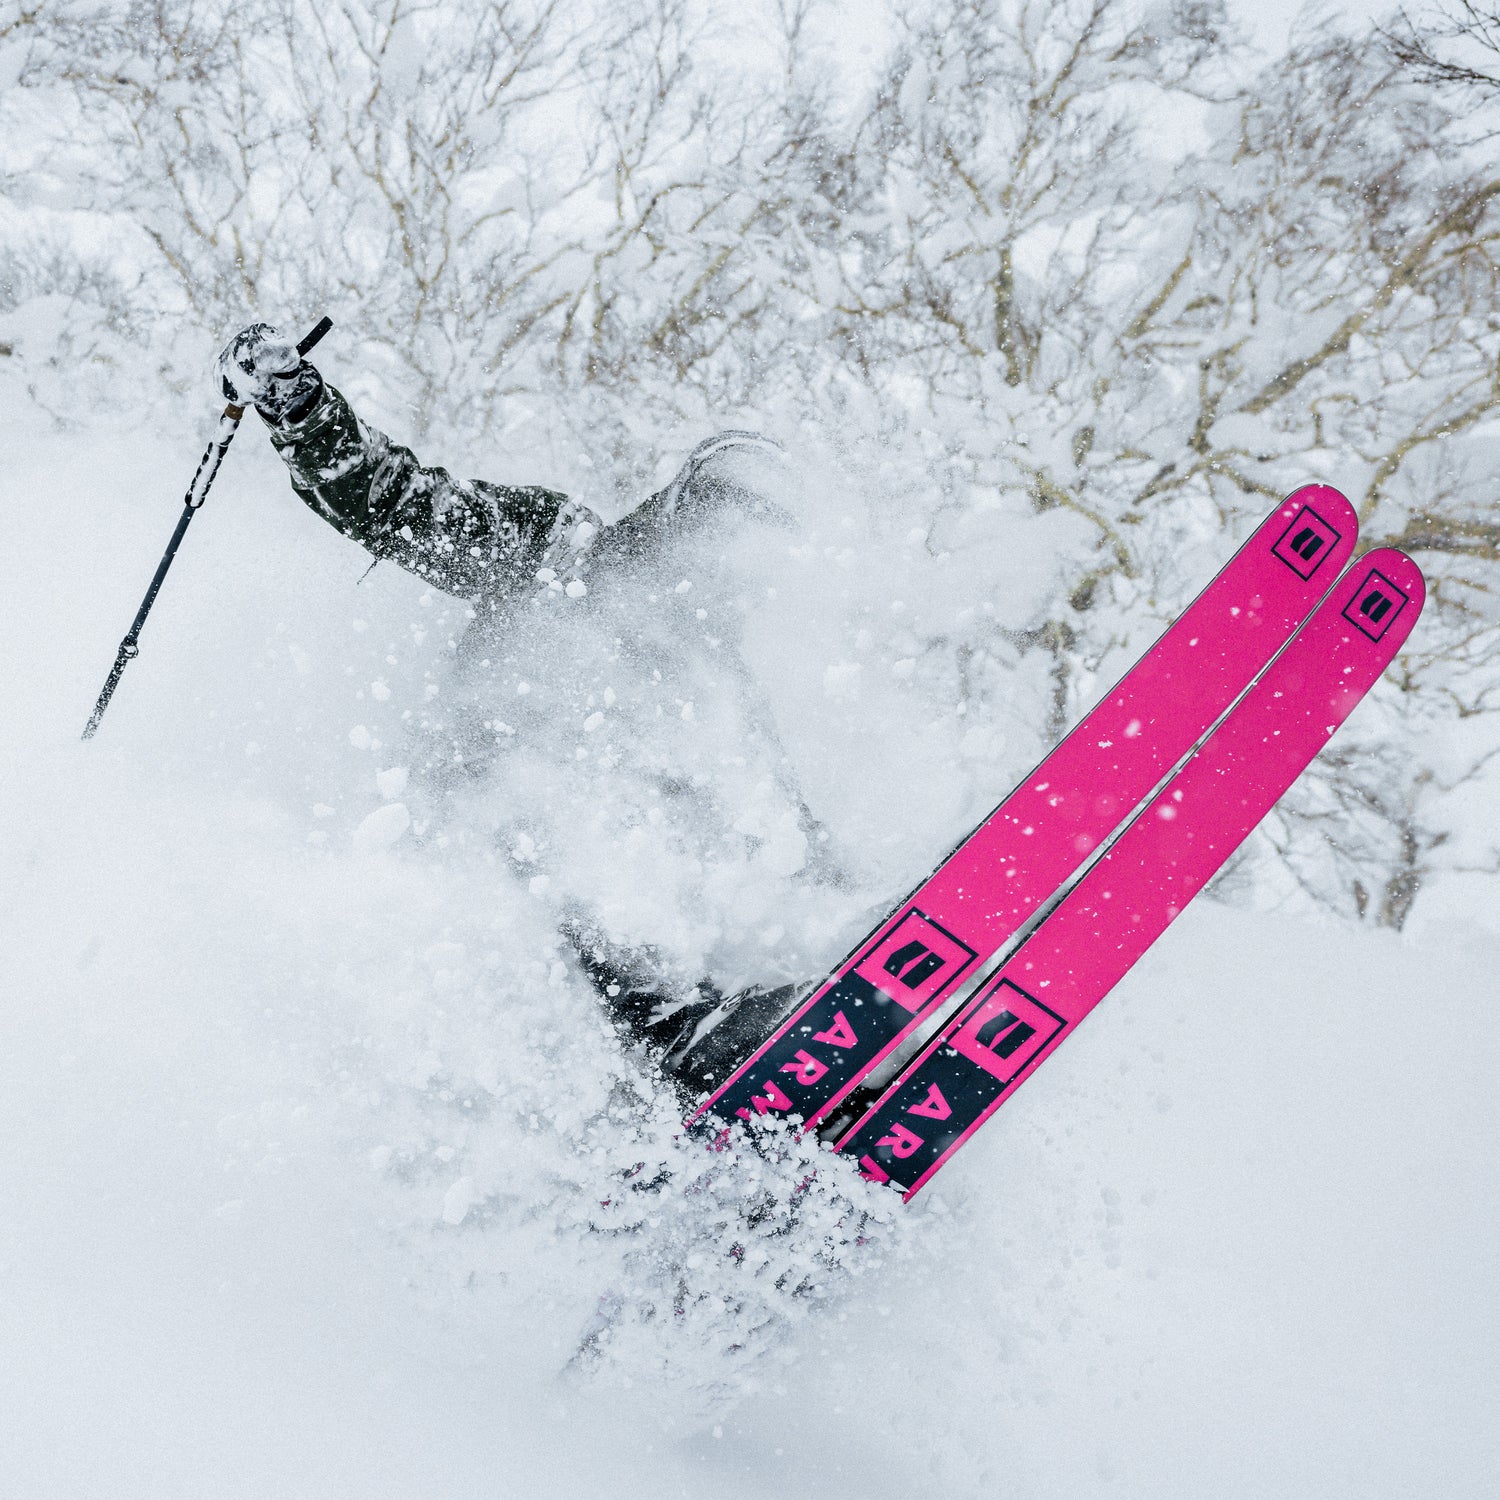 Harnais apprentissage ski – Fit Super-Humain